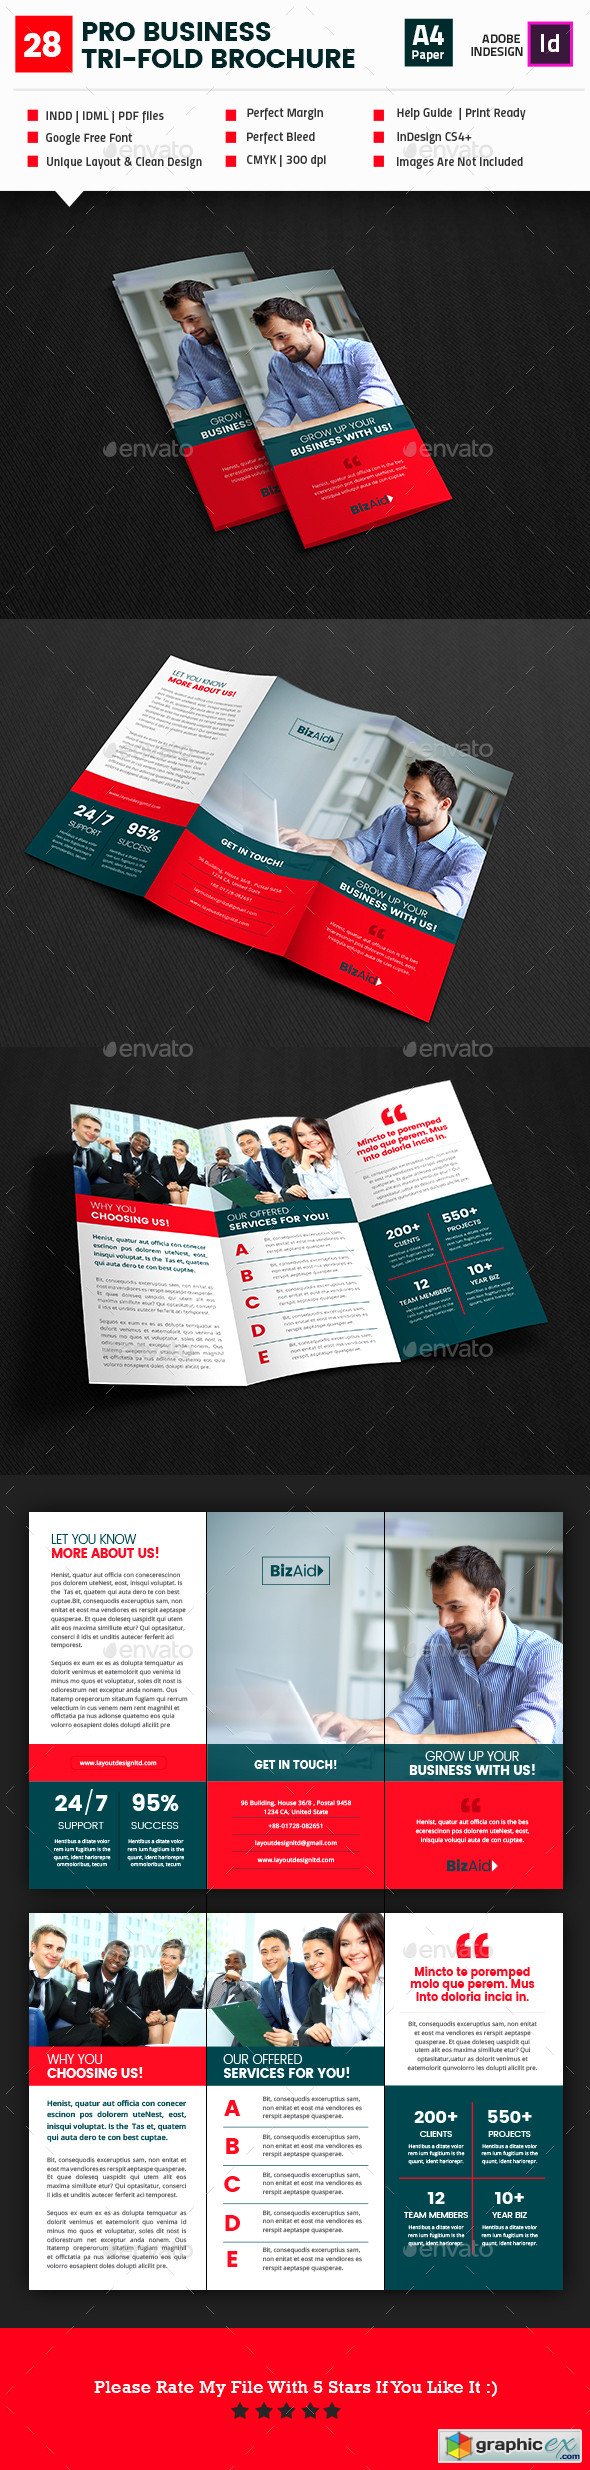 Pro Business Tri-Fold Brochure V02